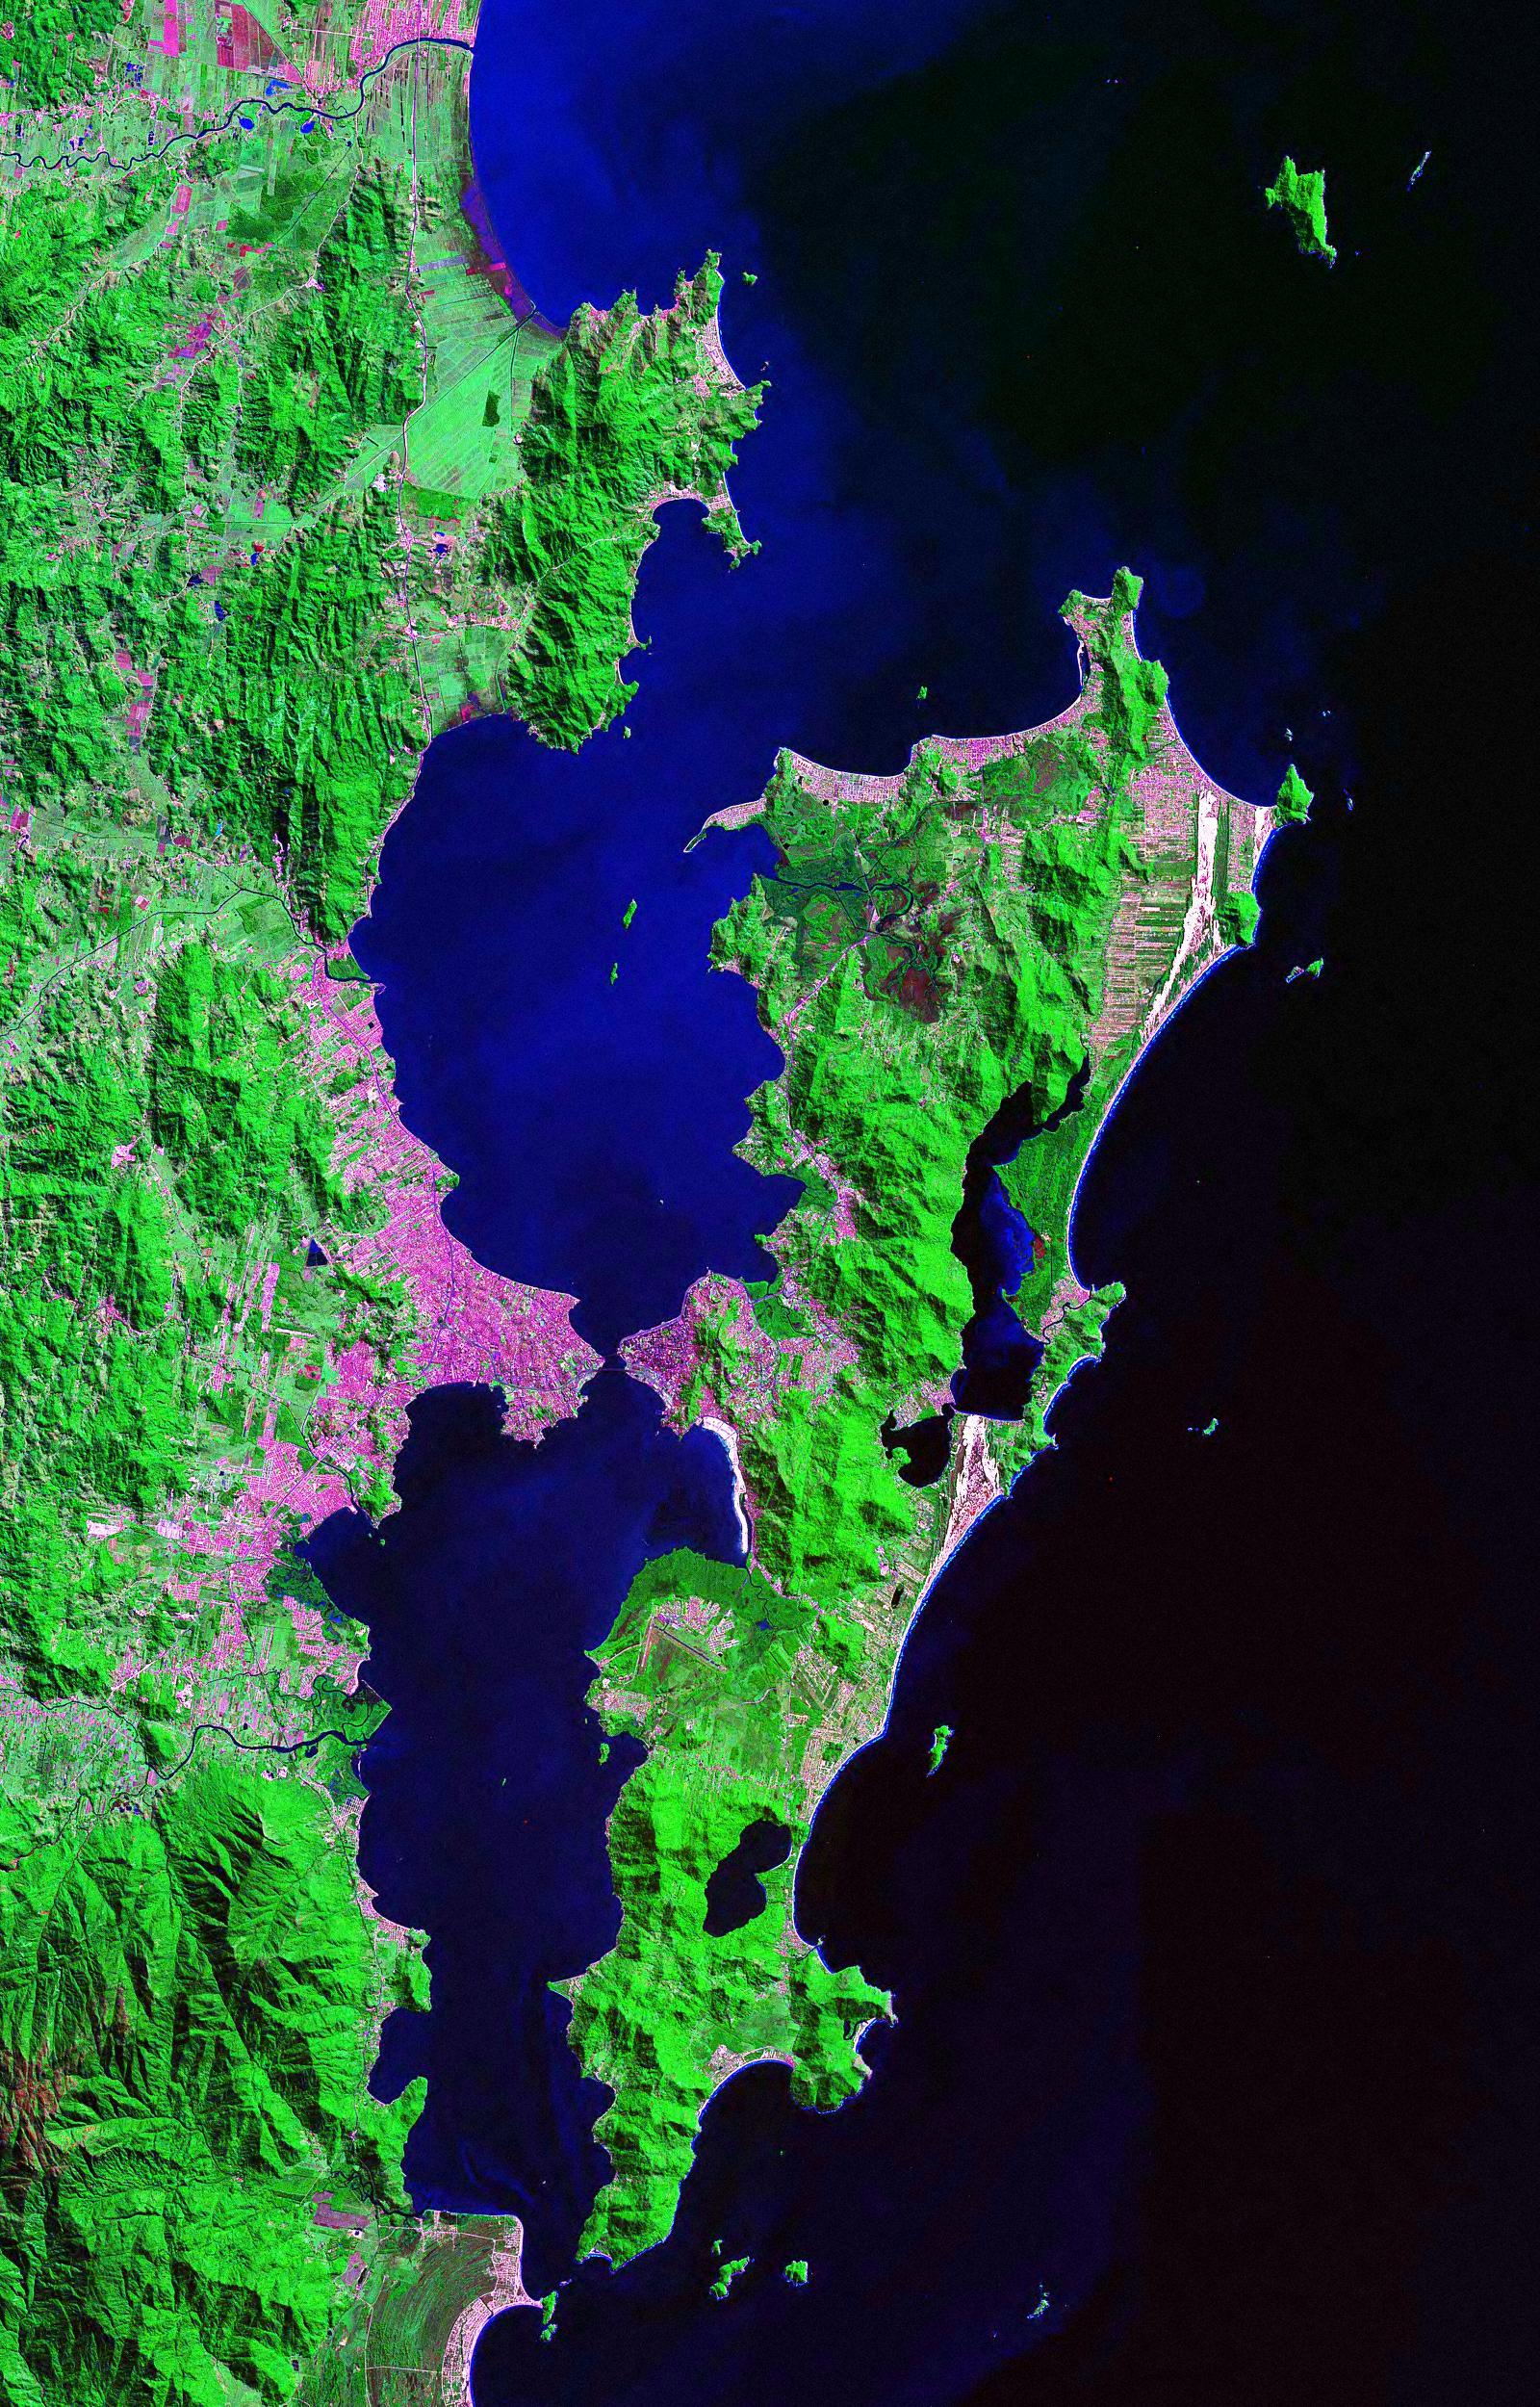 SantaCatarinaIsland Landsat 2000